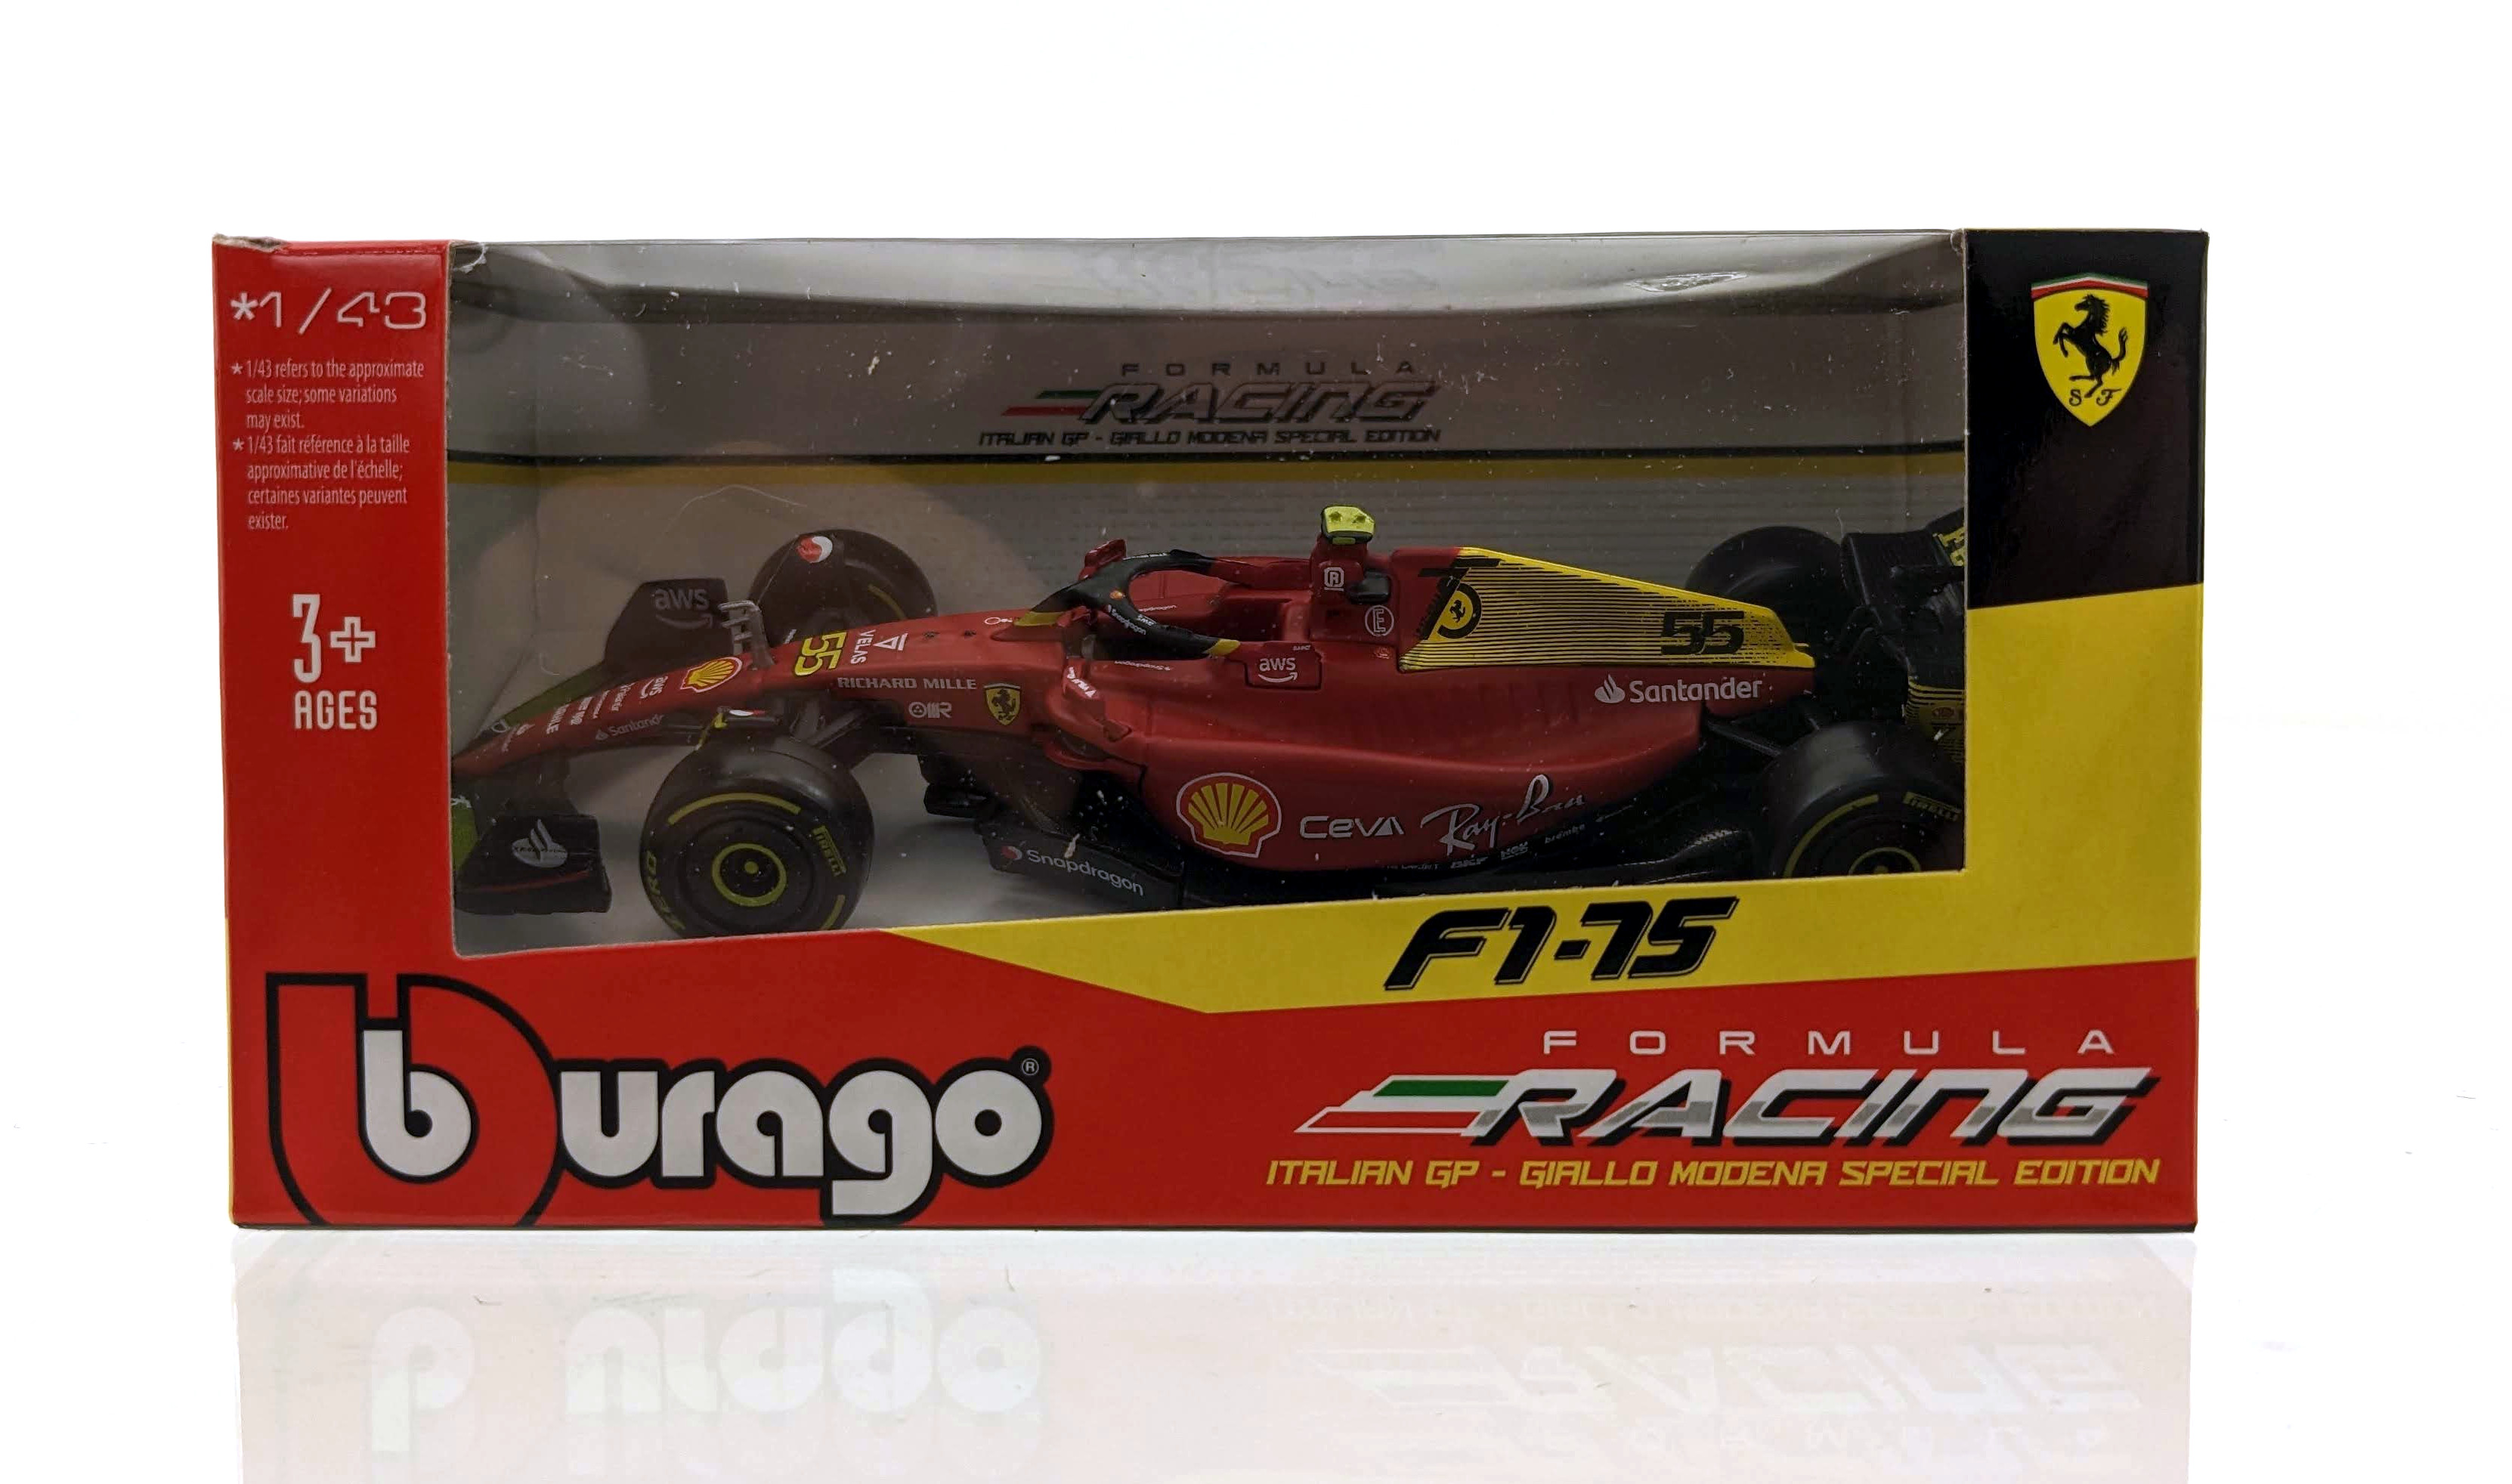 Modellauto Spielzeugauto - (Maßstab Monza-Ausführung 1:43) BBURAGO F1-75 #55 Ferrari 18-36832 Sainz